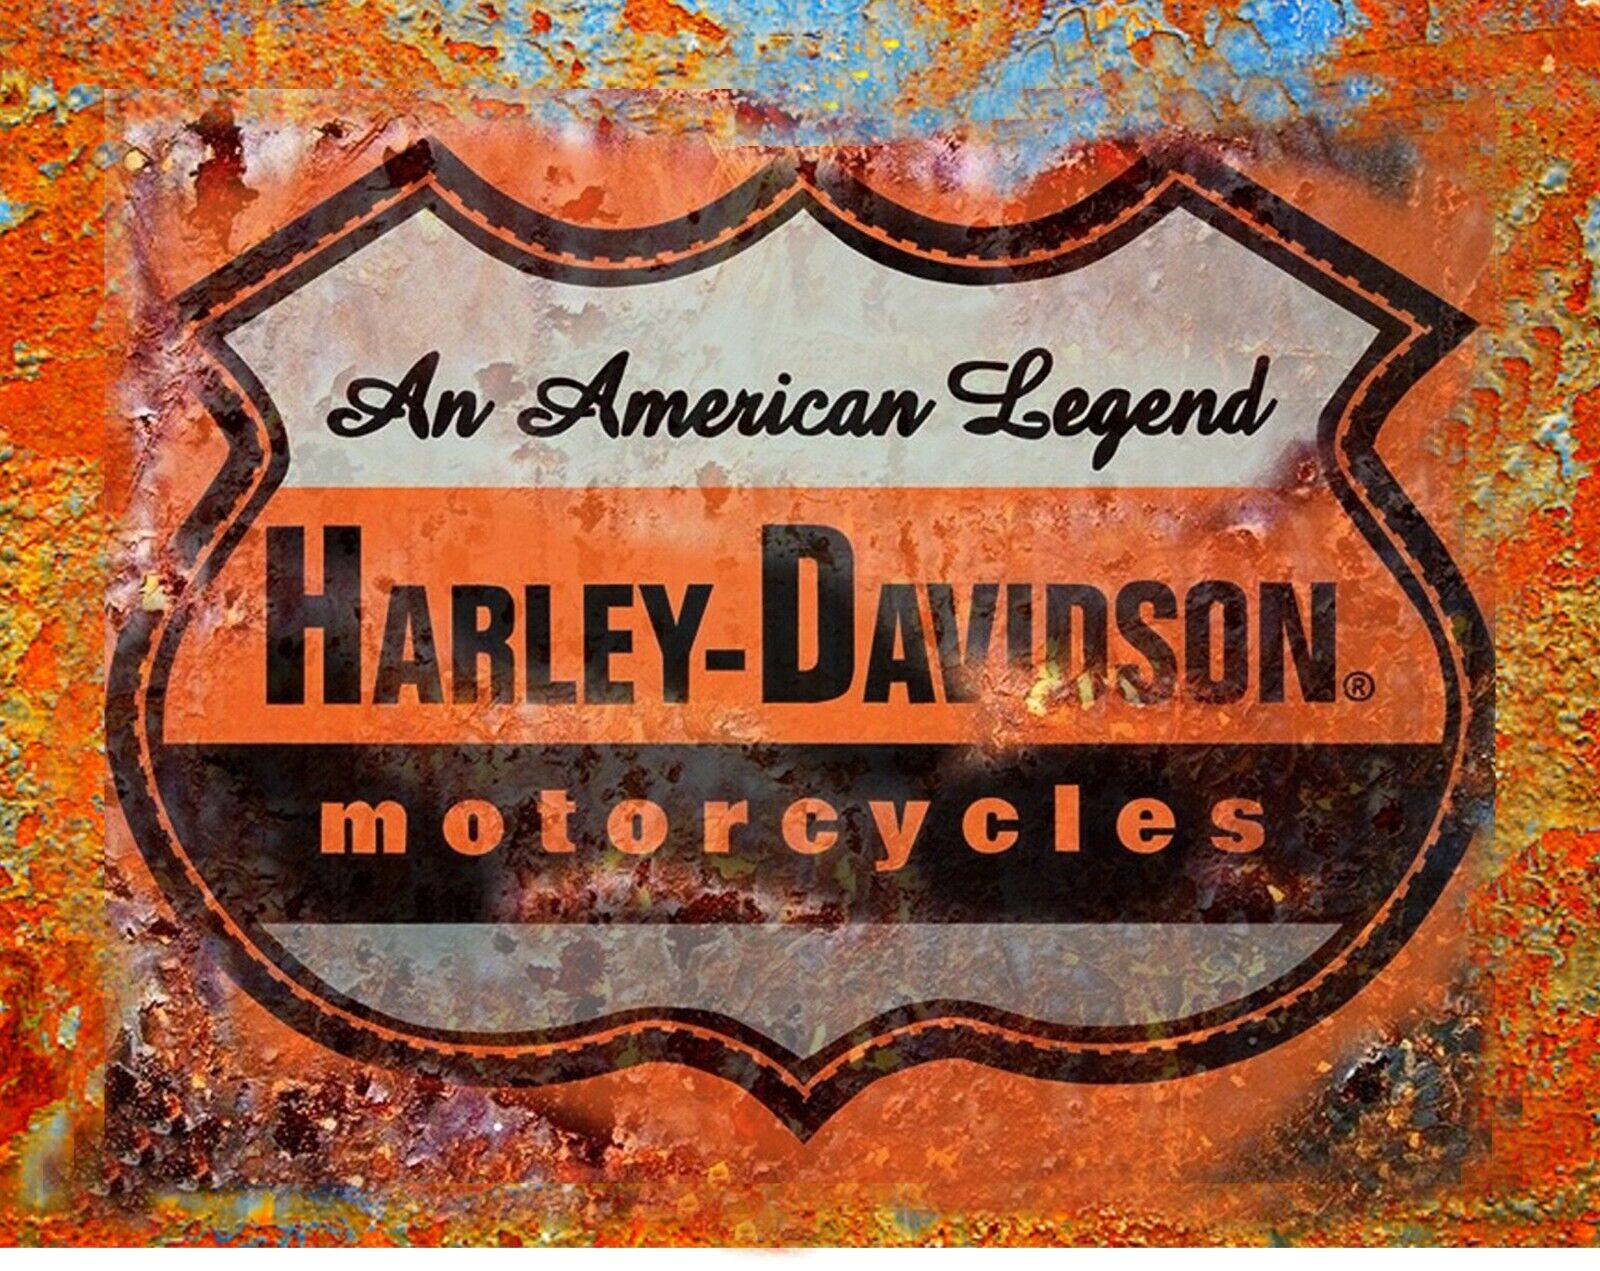 Harley Davidson Legends Never Die Mouse Pad Tin Sign Art On Mousepad